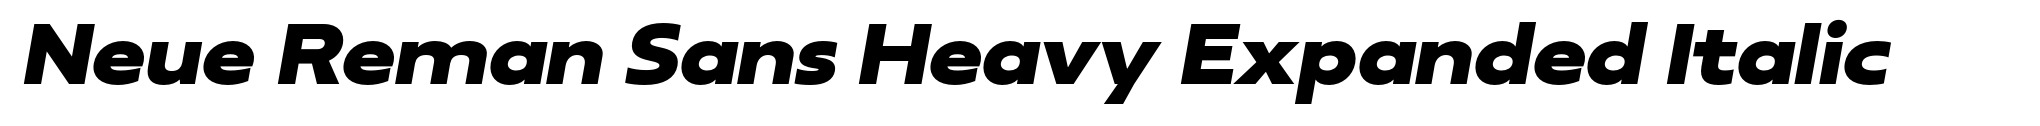 Neue Reman Sans Heavy Expanded Italic image